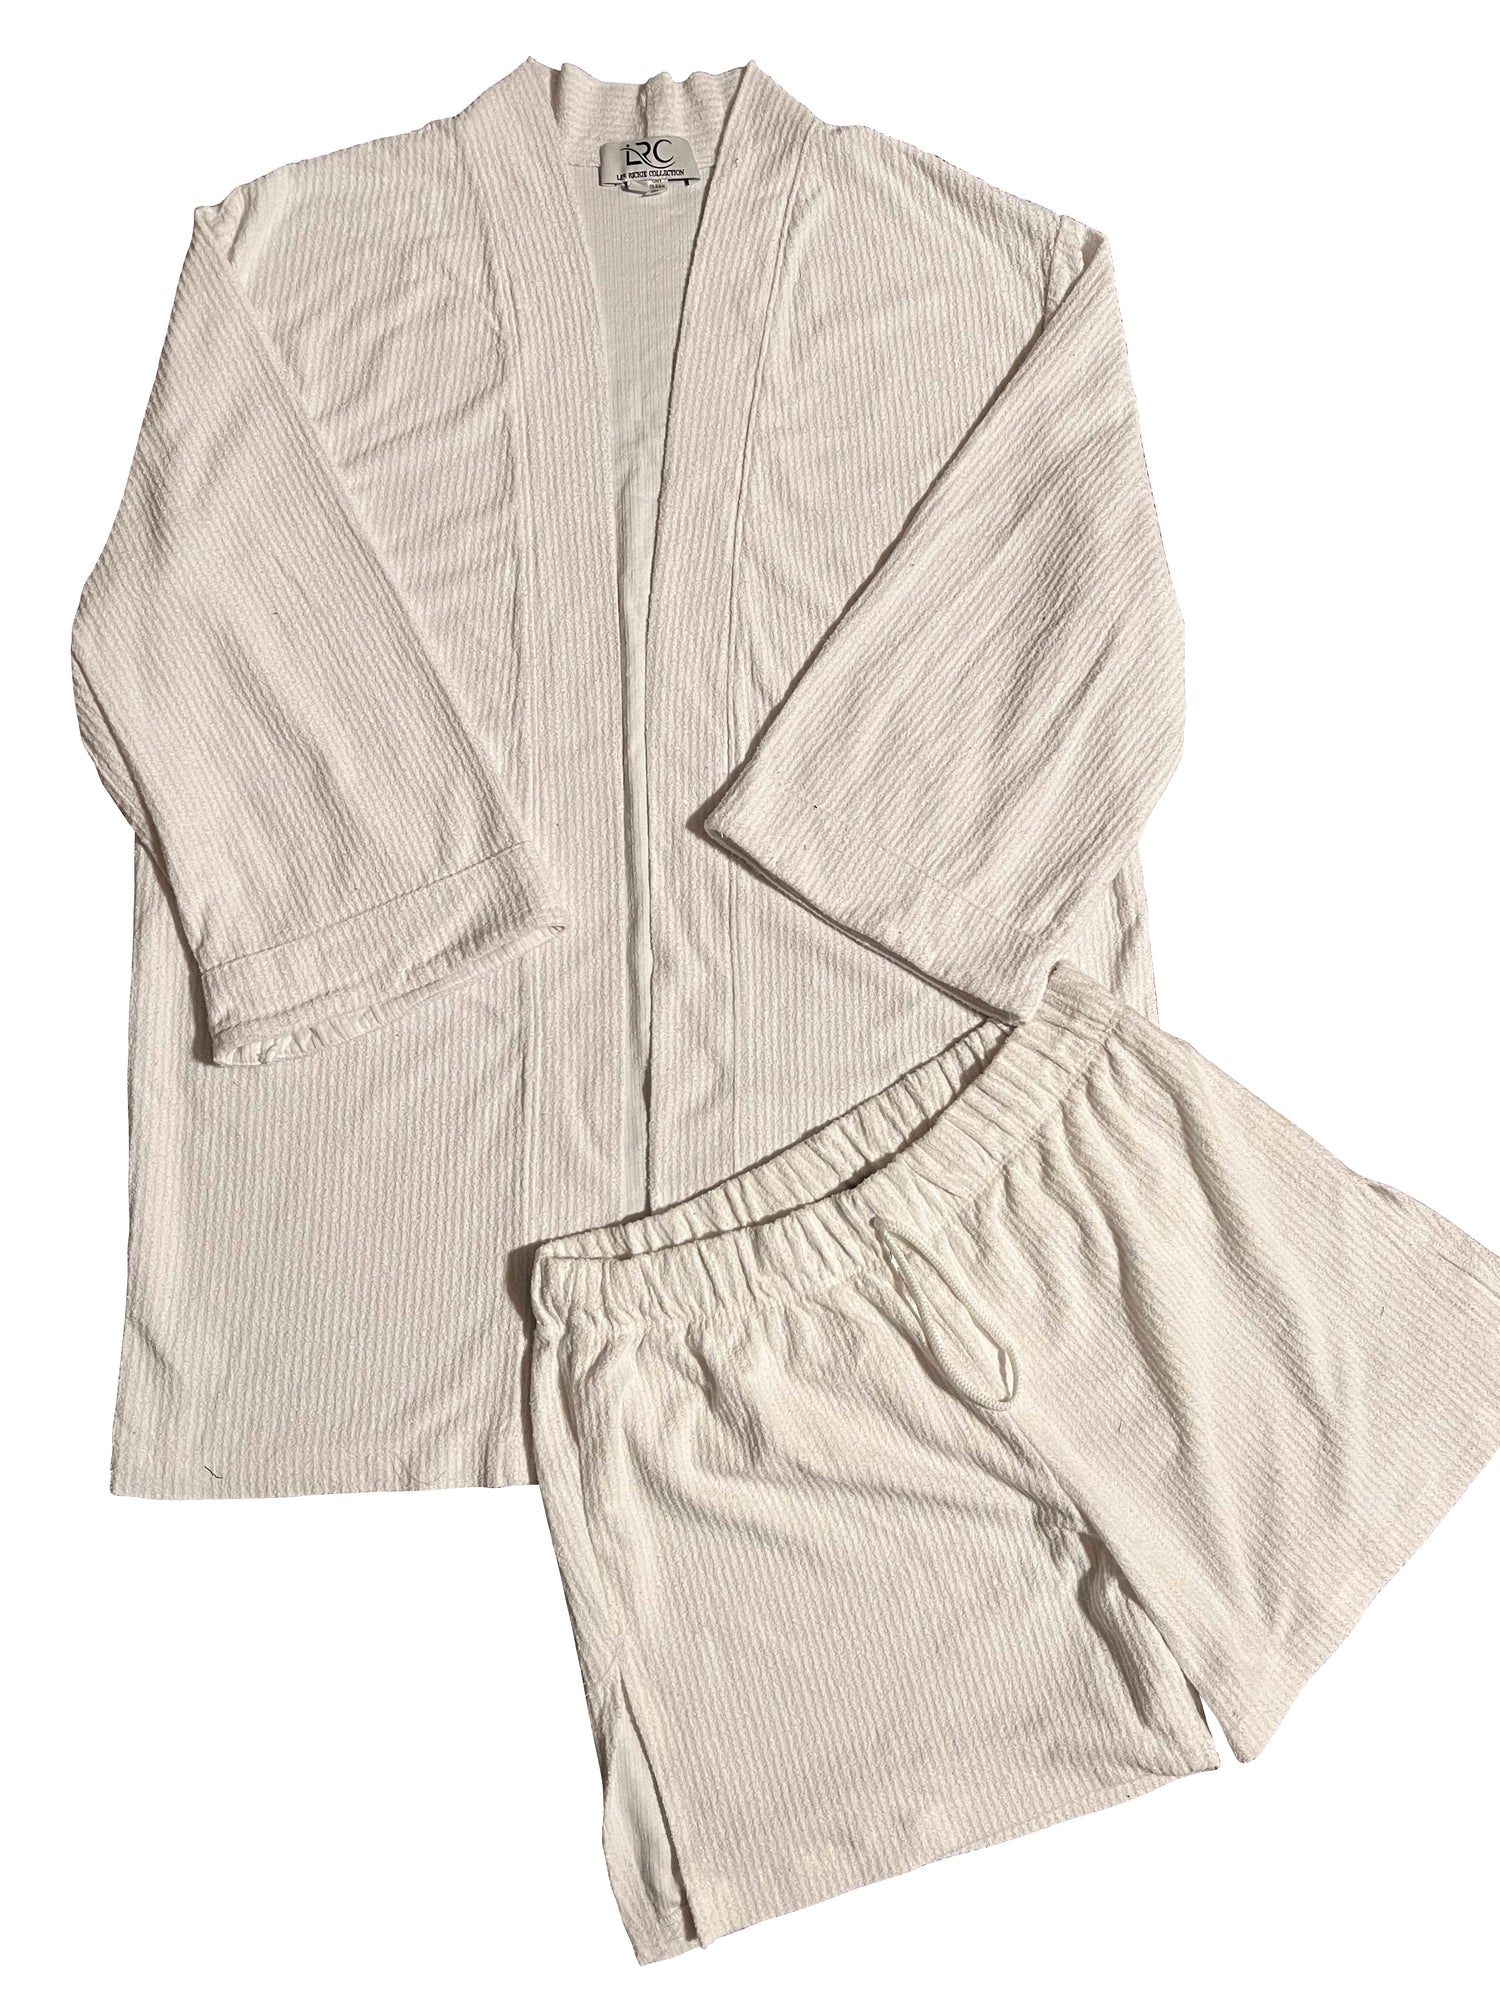 LRC Terry cloth pajamas short set – Lee Rickie Collection